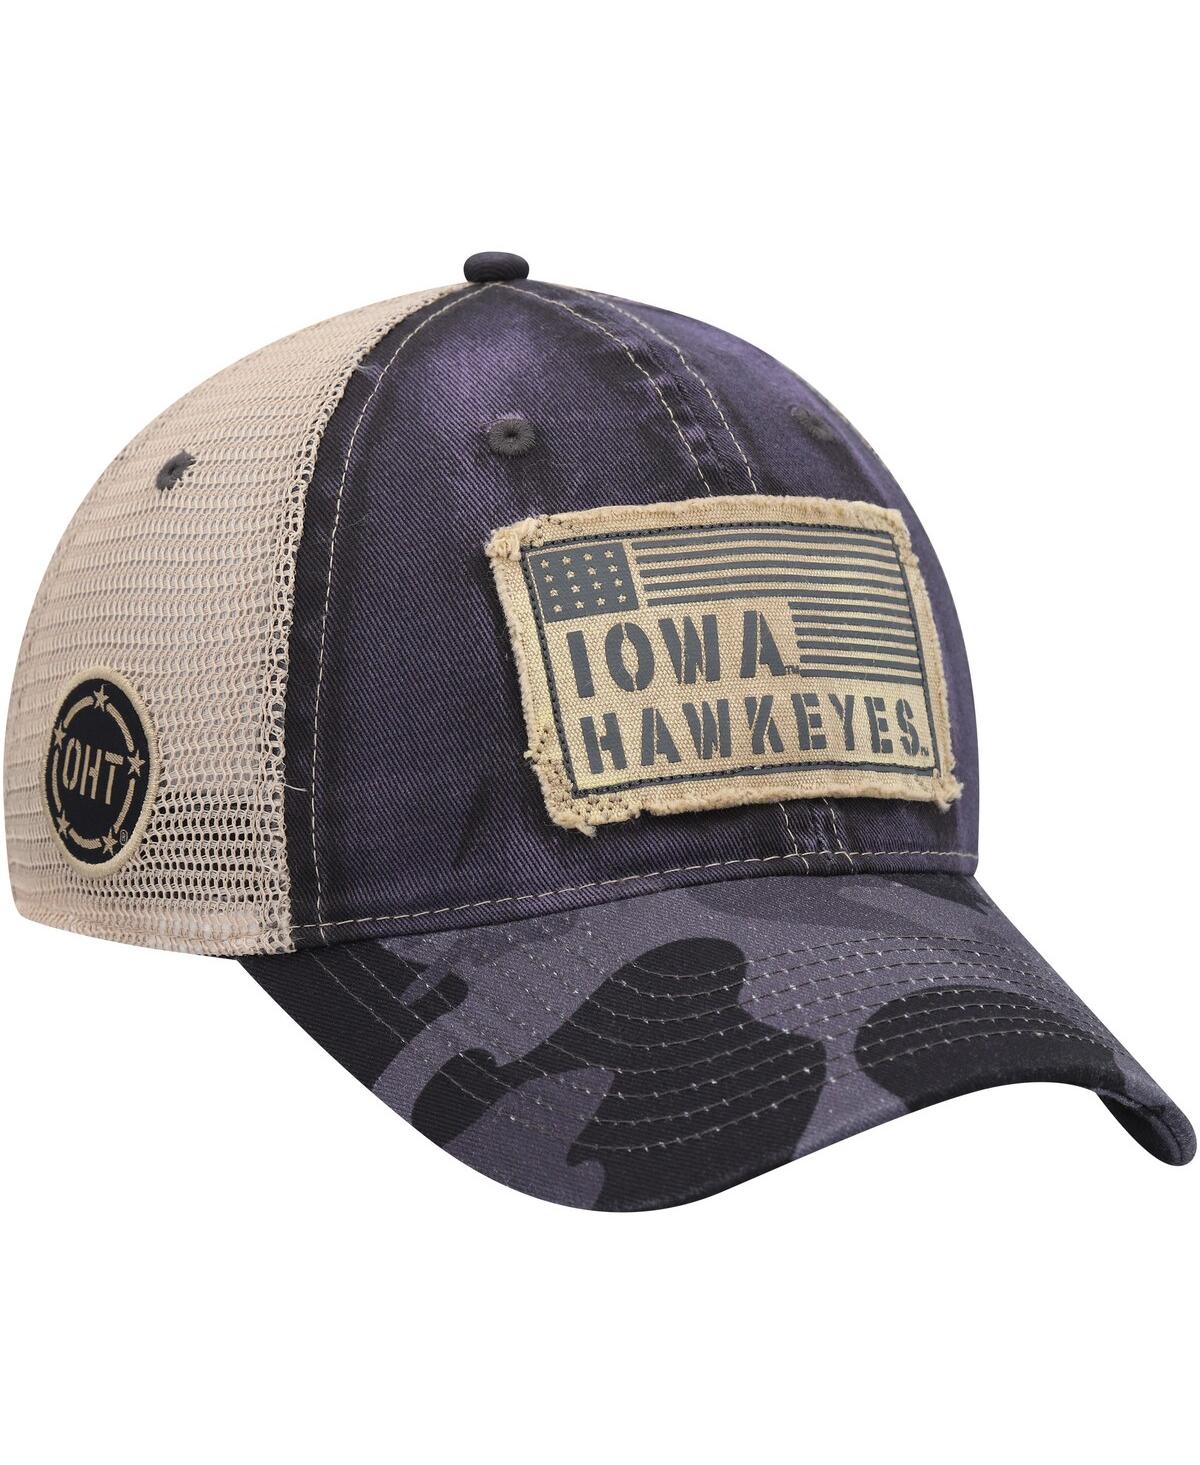 Shop Colosseum Men's  Charcoal Iowa Hawkeyes Oht Military-inspired Appreciation United Trucker Snapback Ha